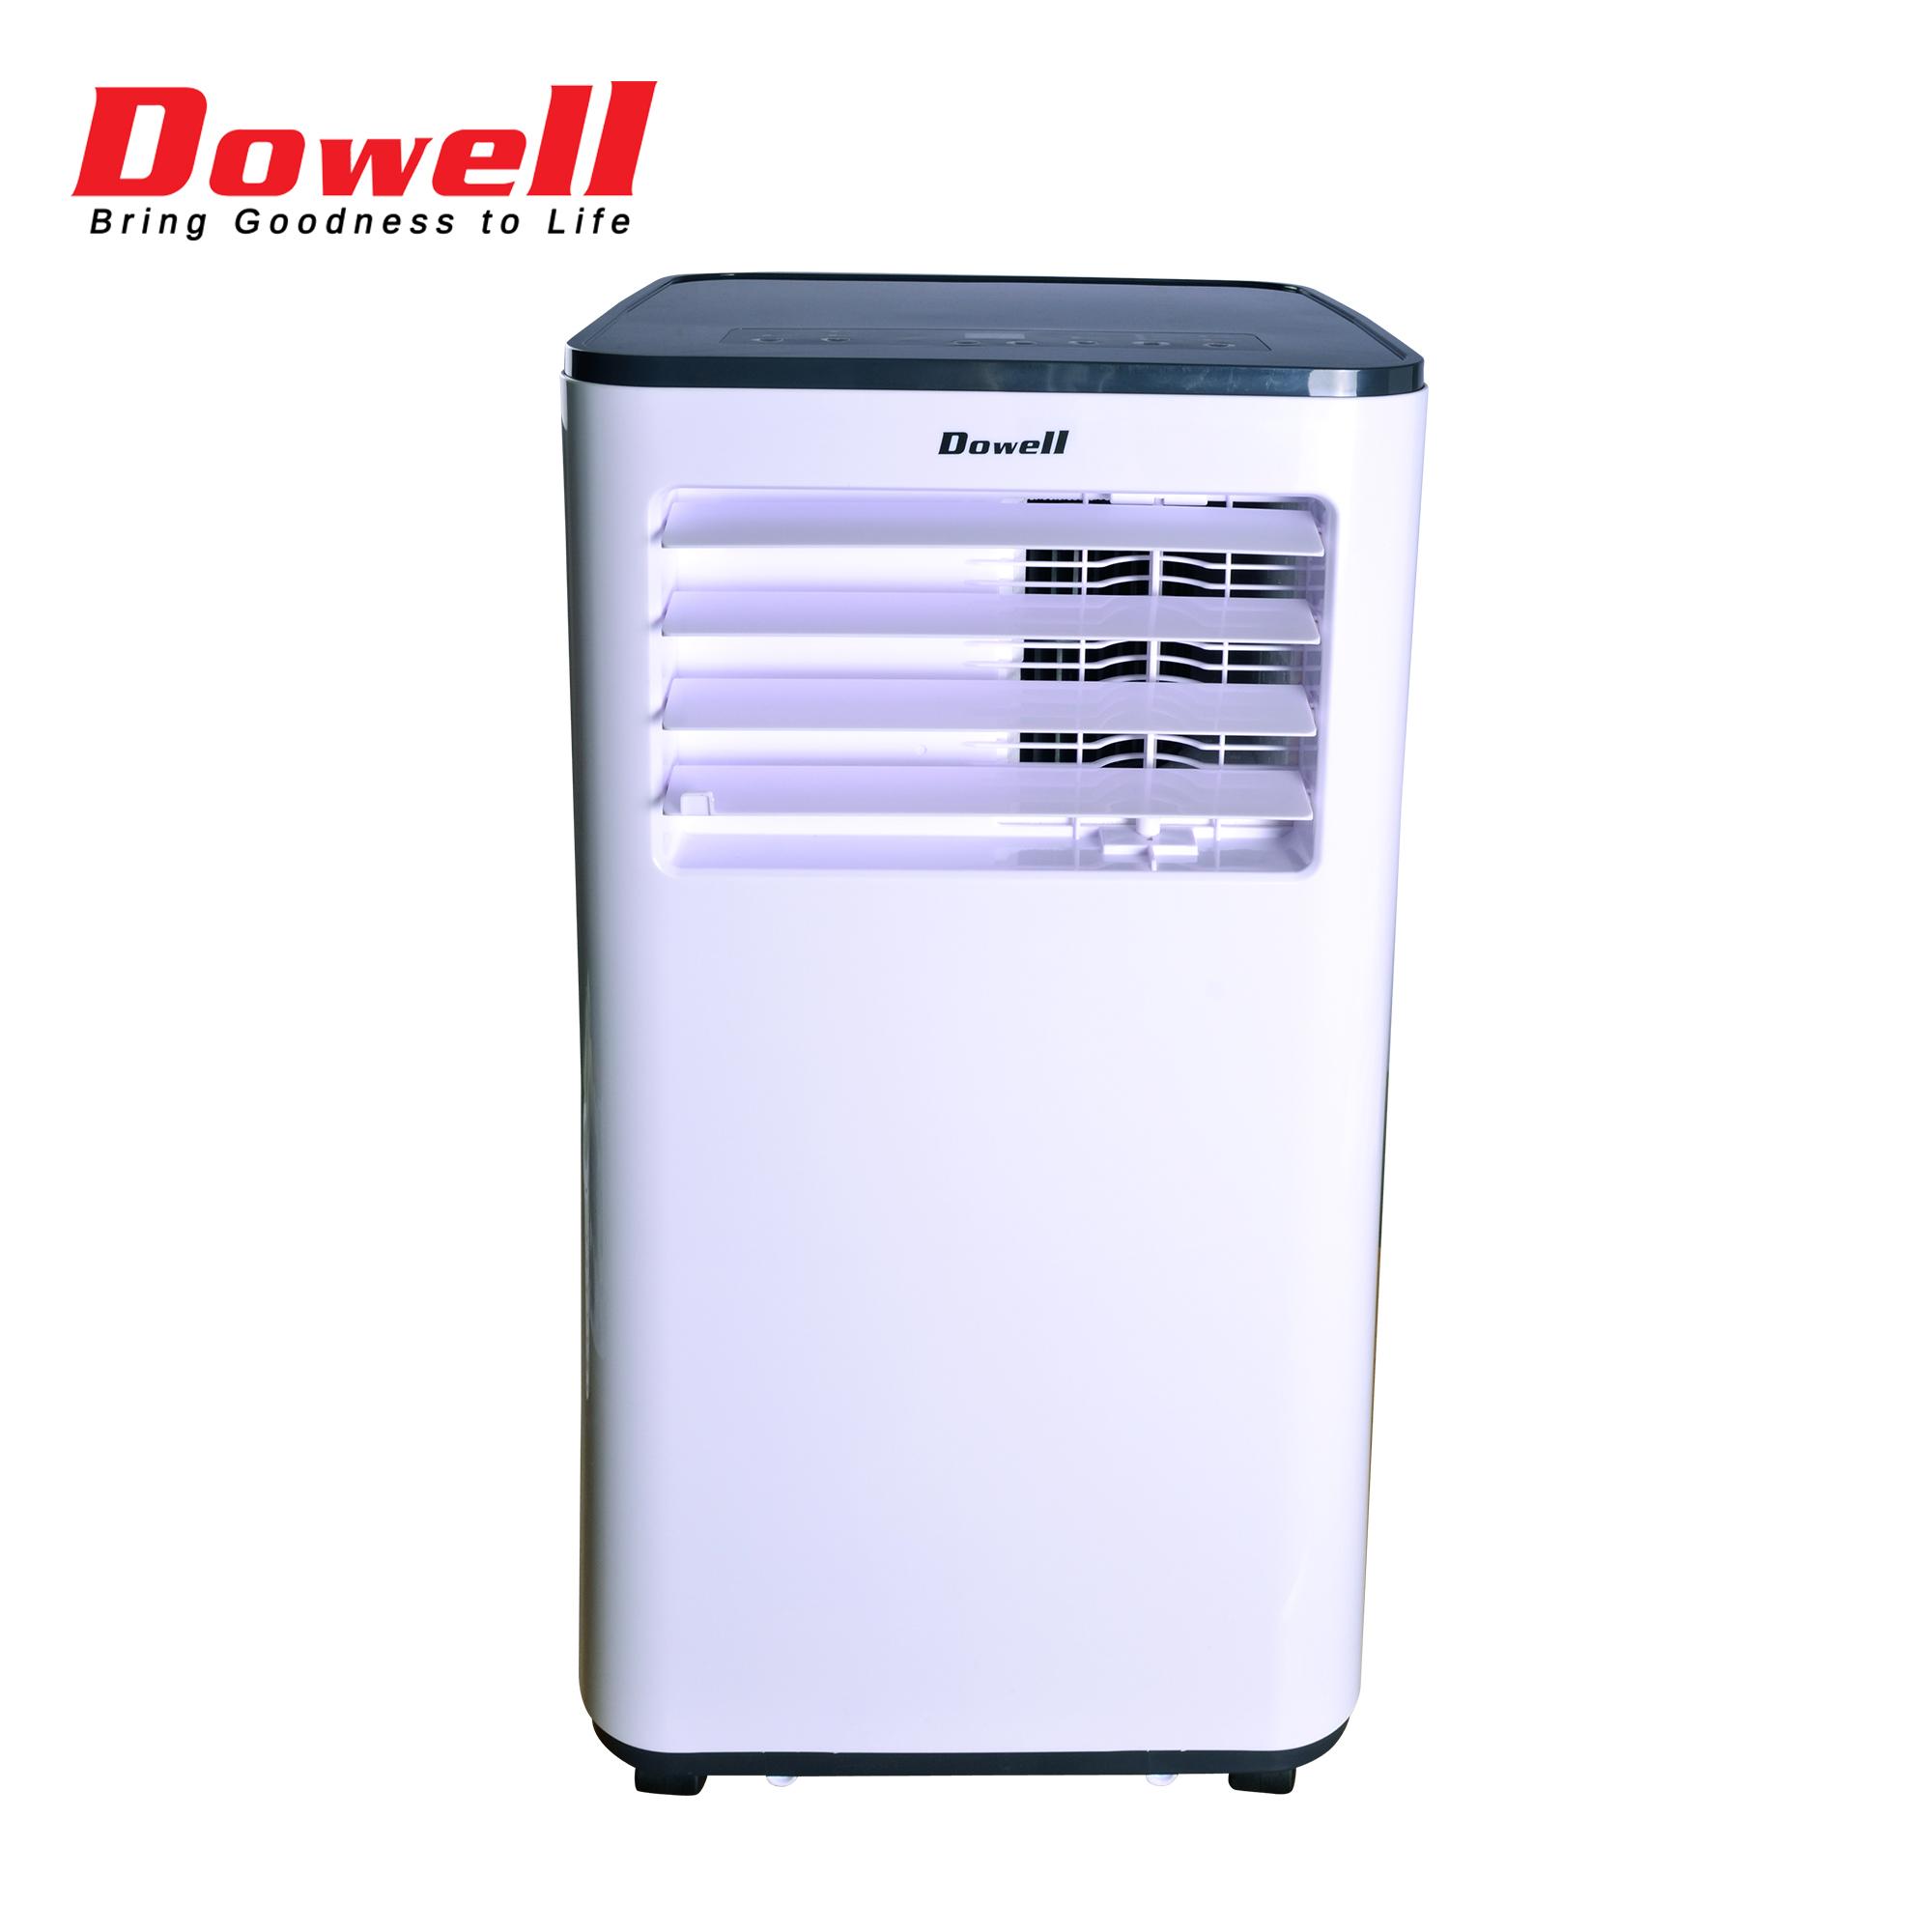 Dowell Portable Aircon Pa 29k16 1 0hp Air Conditioner Lazada Ph